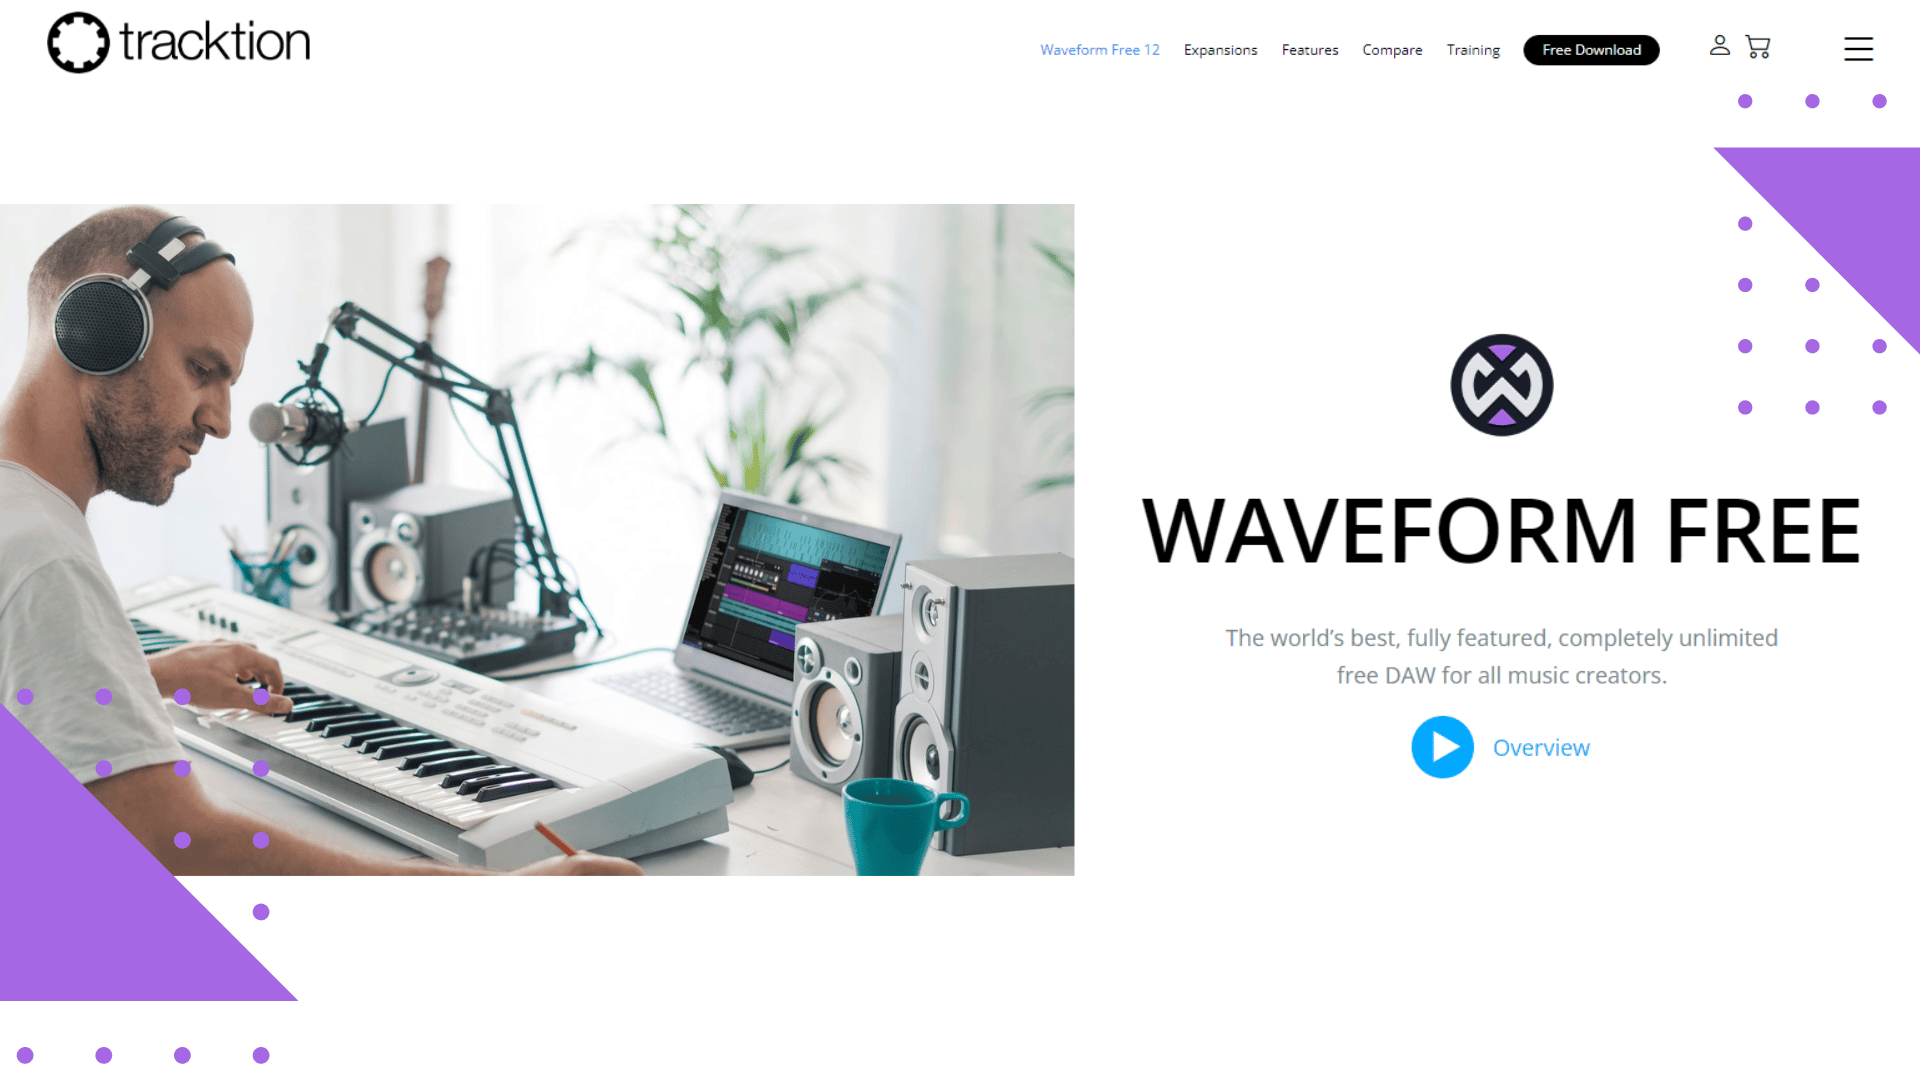 Waveform Free Features